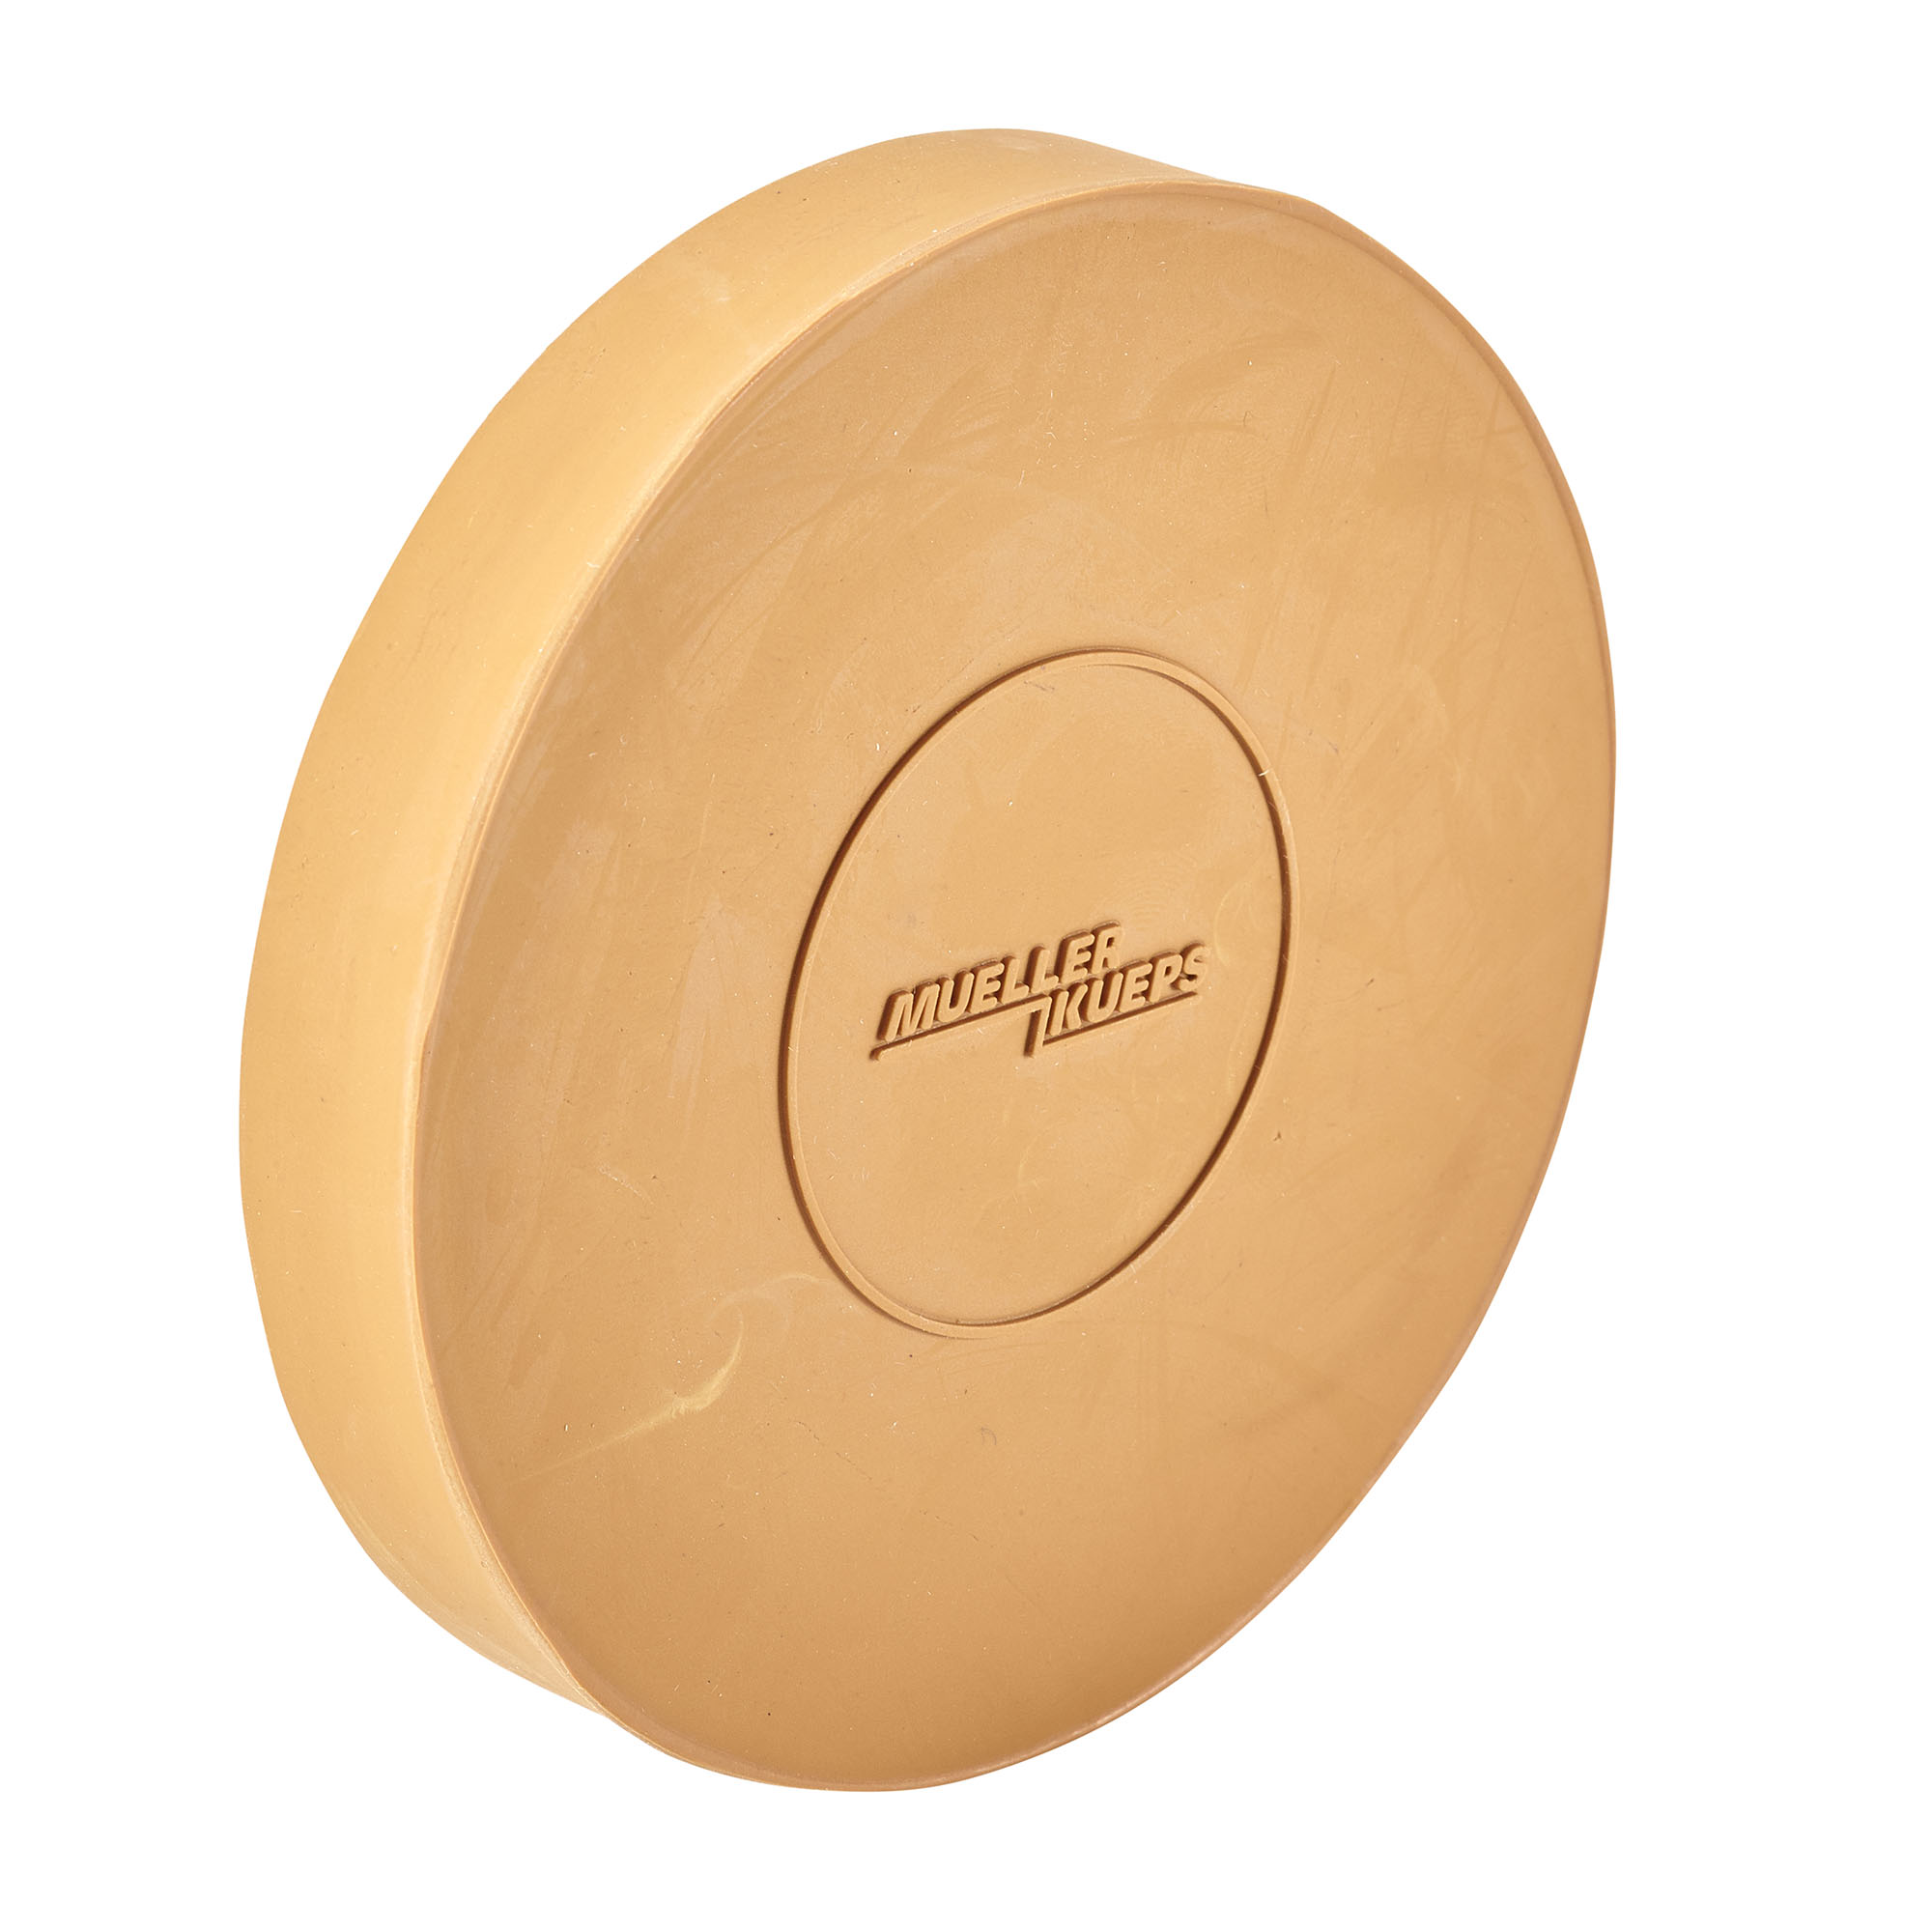 Eraser disc - rubber